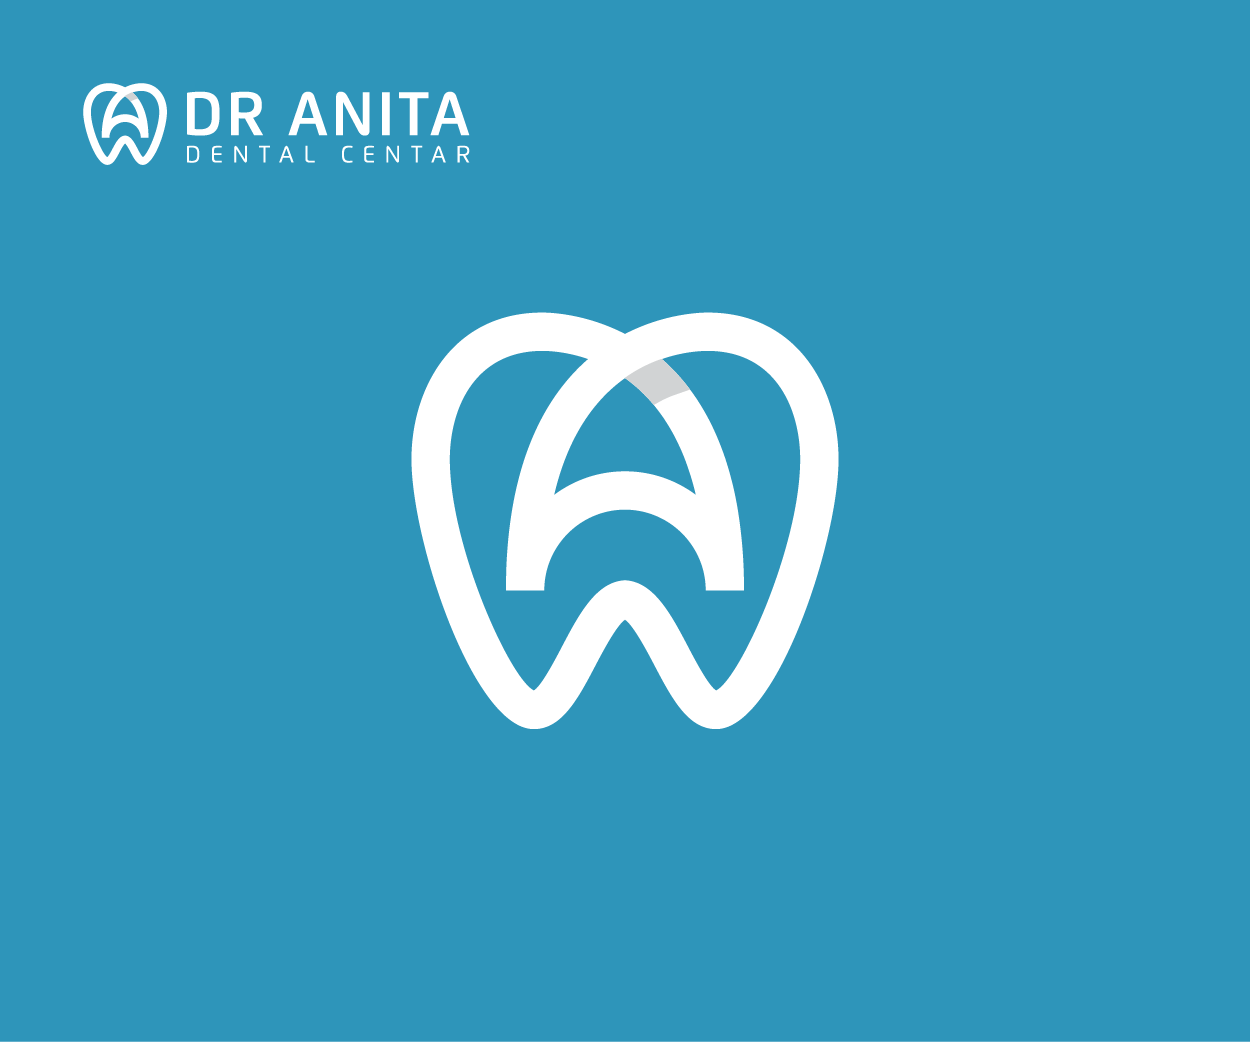 DR Anita Dental Center Logo Design Image